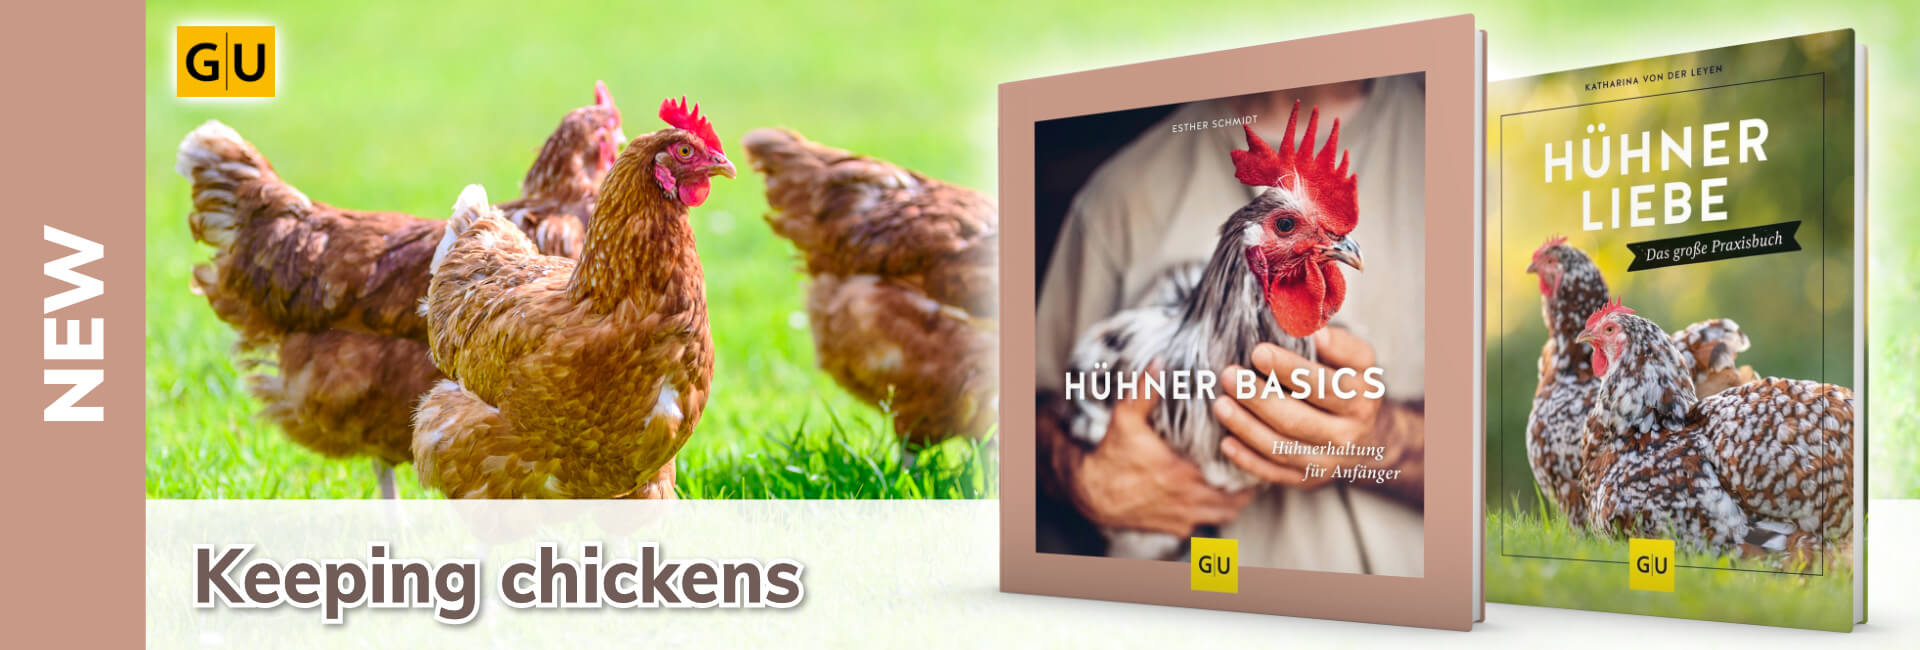 GU Books - Keeping chickens